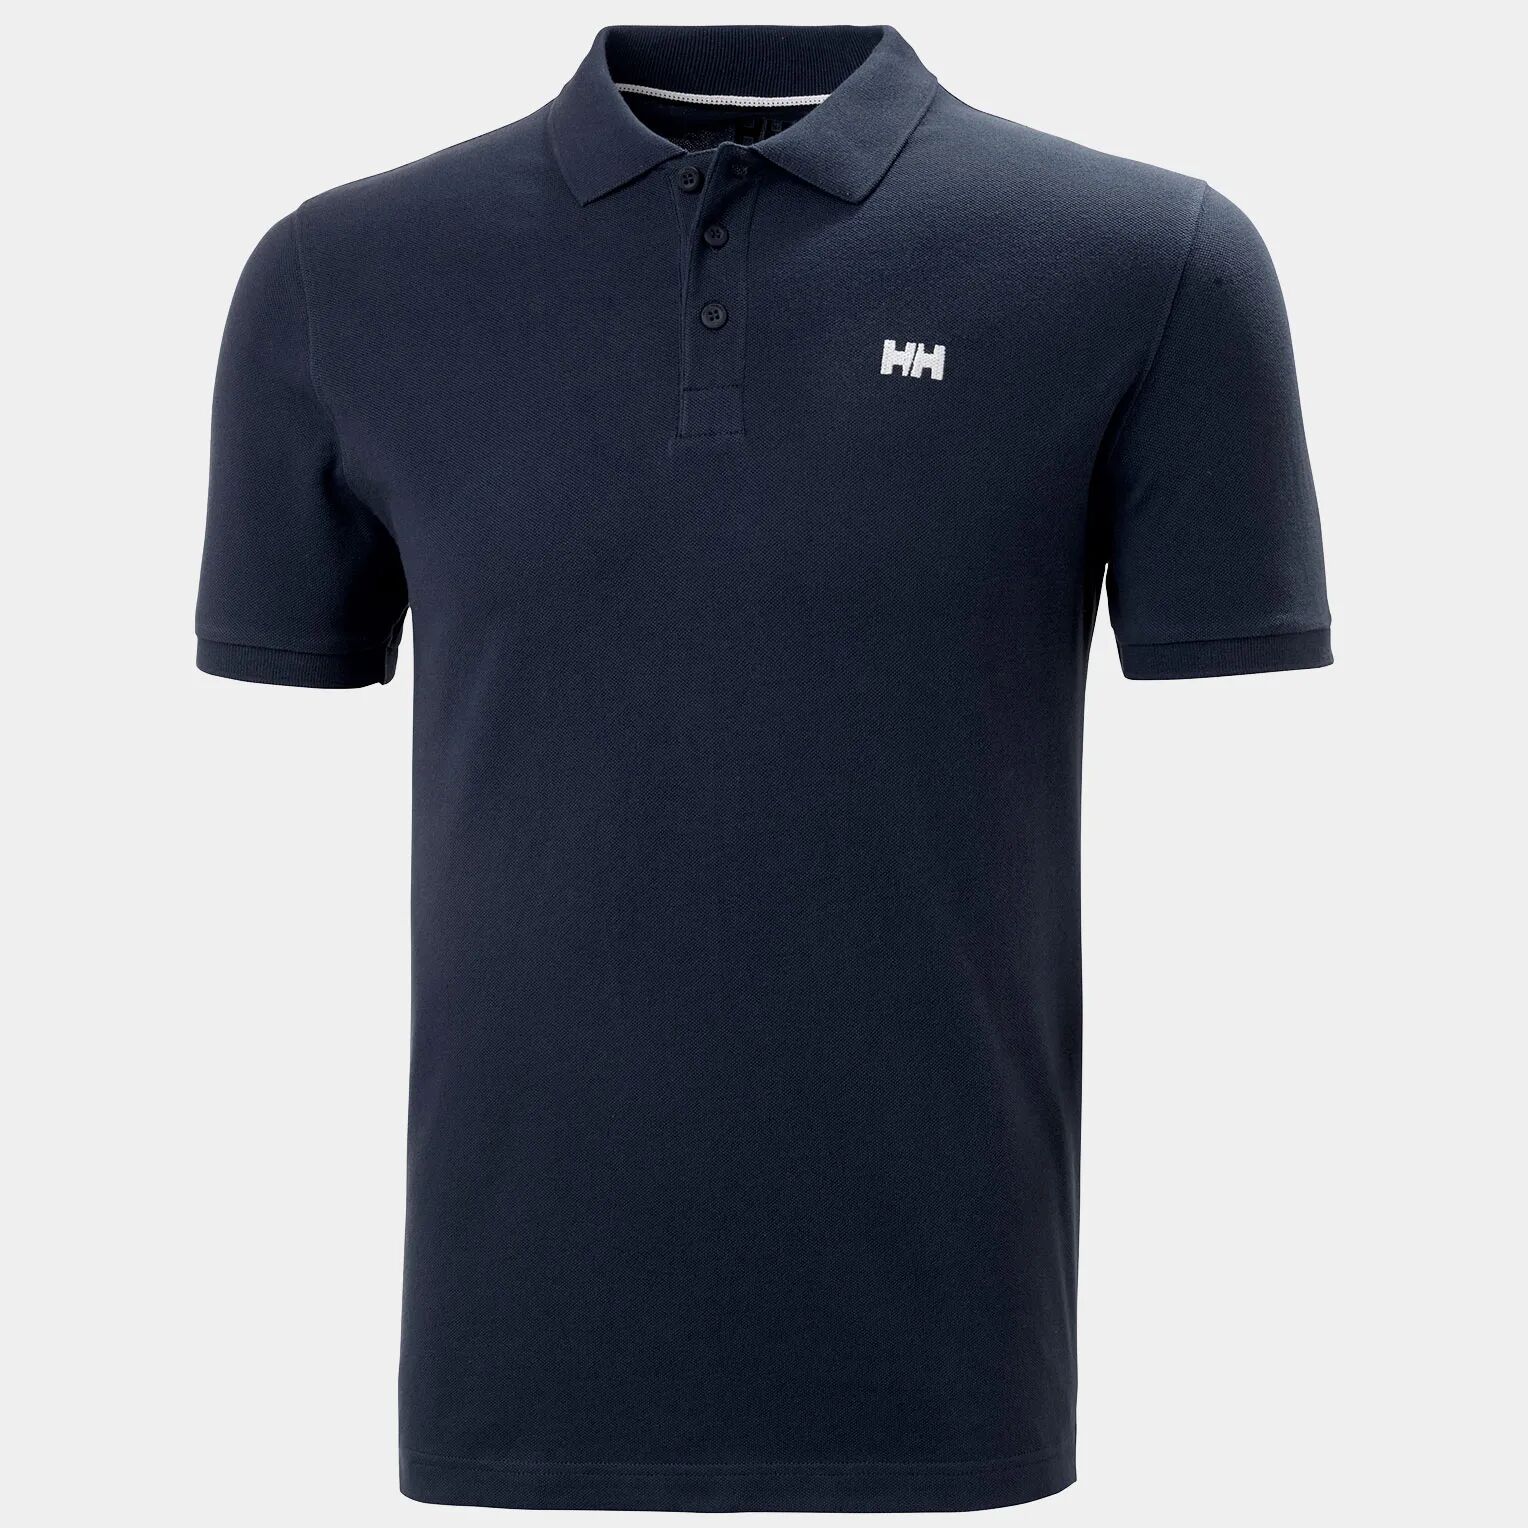 Helly Hansen Men's Transat Cotton Short-Sleeve Polo Shirt Navy L - Navy Blue - Male